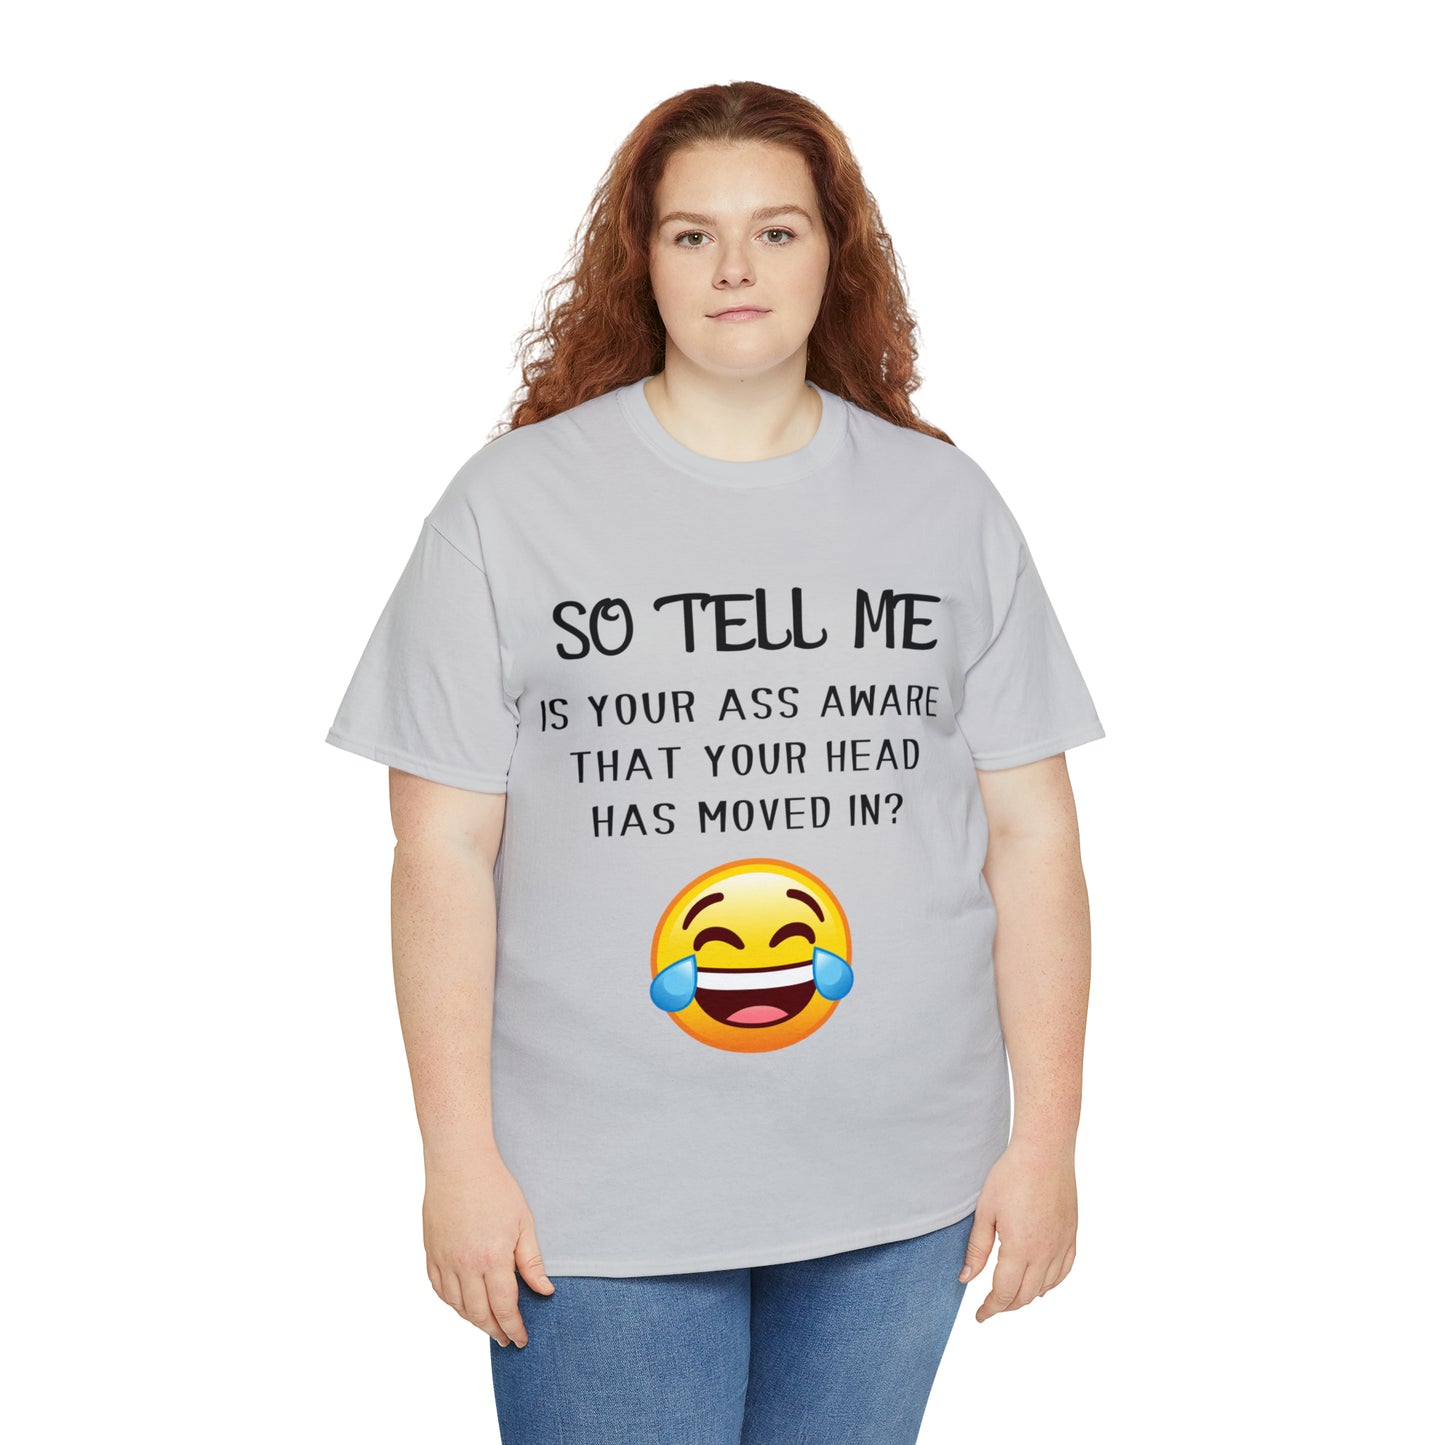 Funny Quote Shirts, Feminist Shirt, Novelty T-shirt, Sarcastic T-shirt